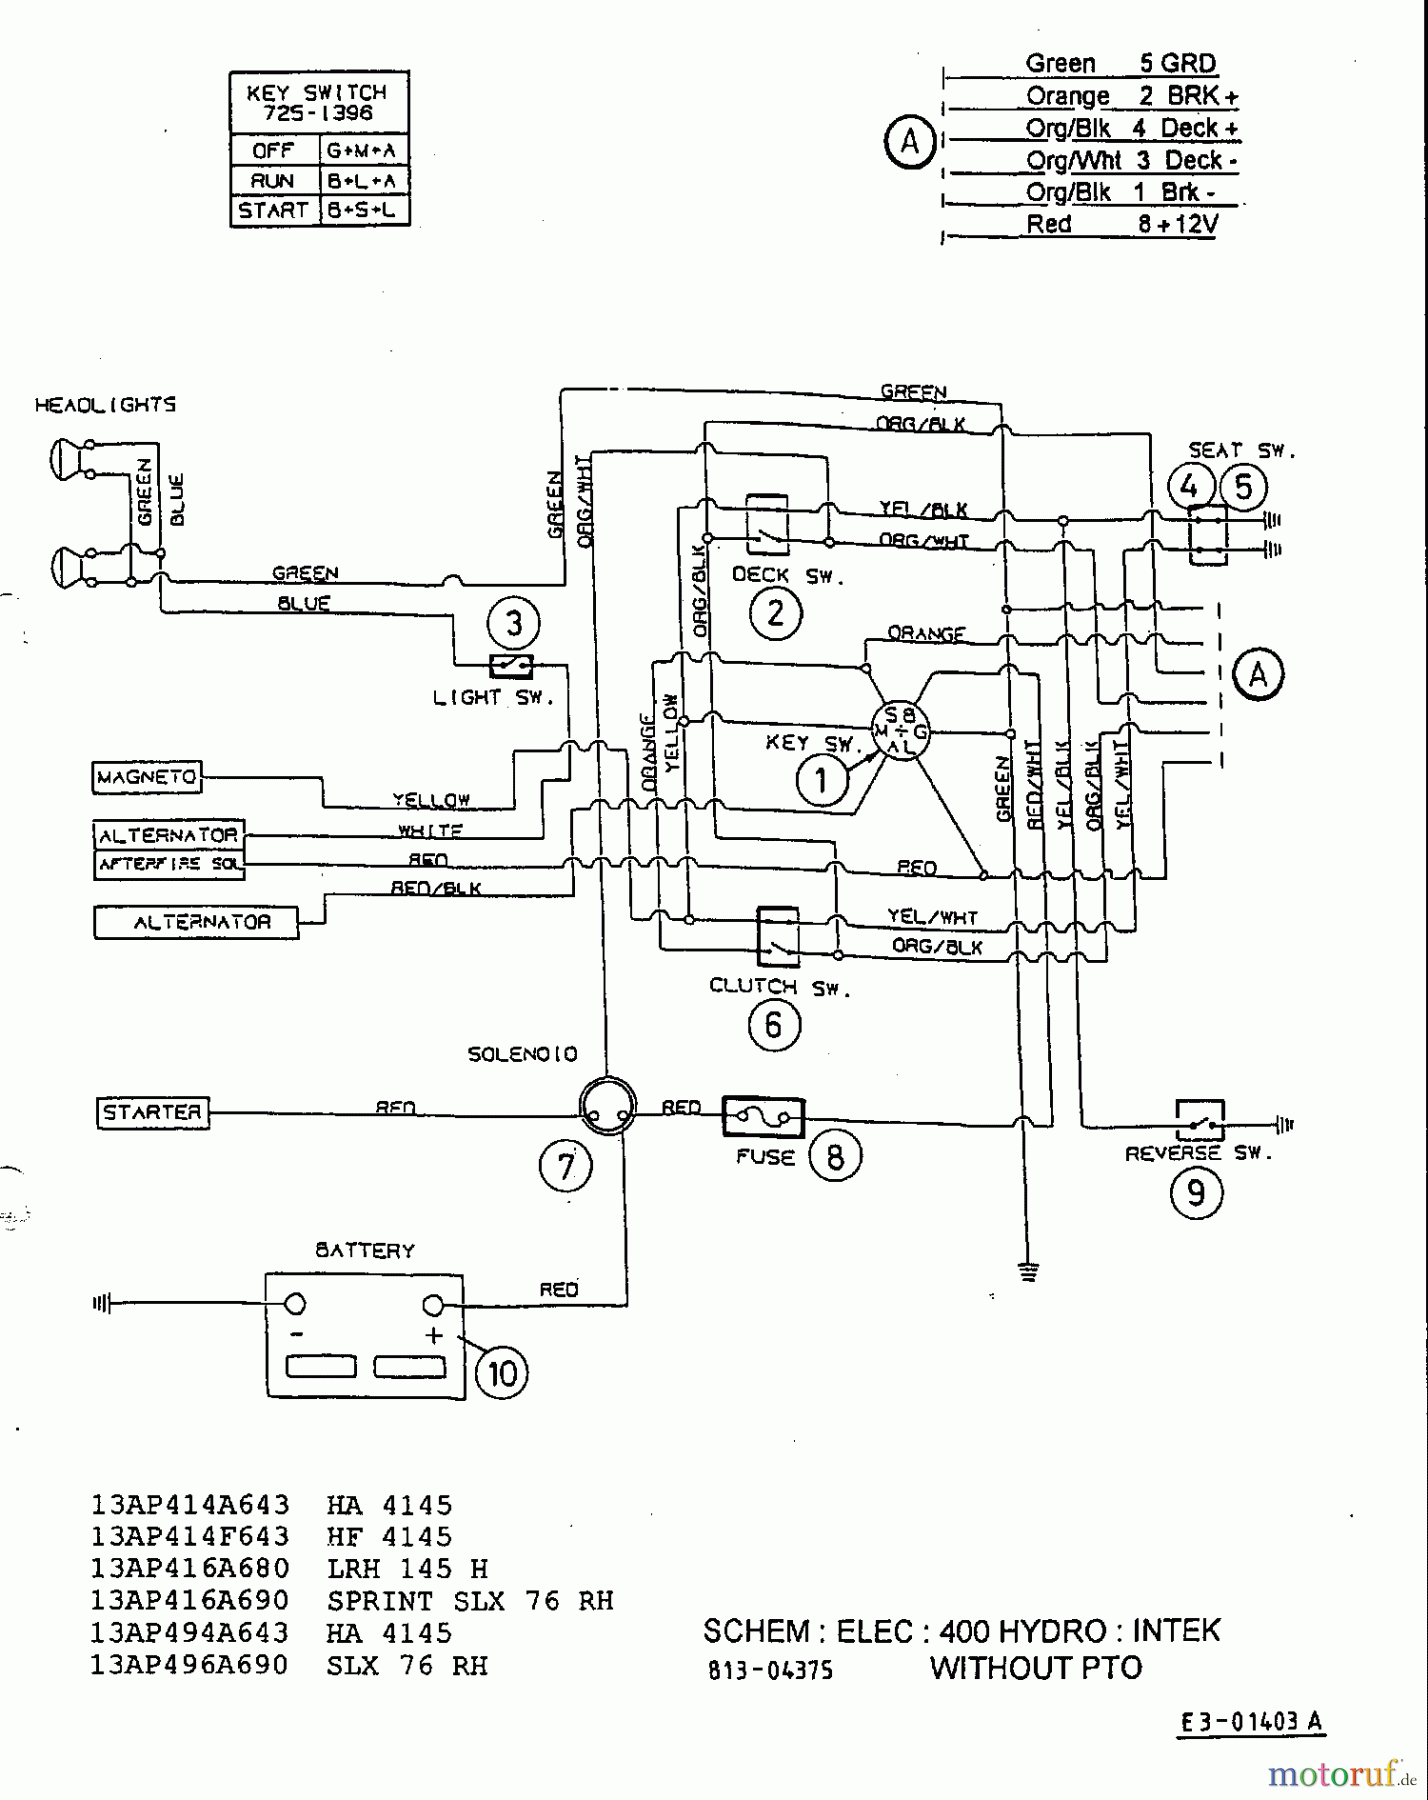  Yard-Man Rasentraktoren HA 4145 13AP414A643  (1999) Schaltplan Intek ohne Elektromagnetkupplung